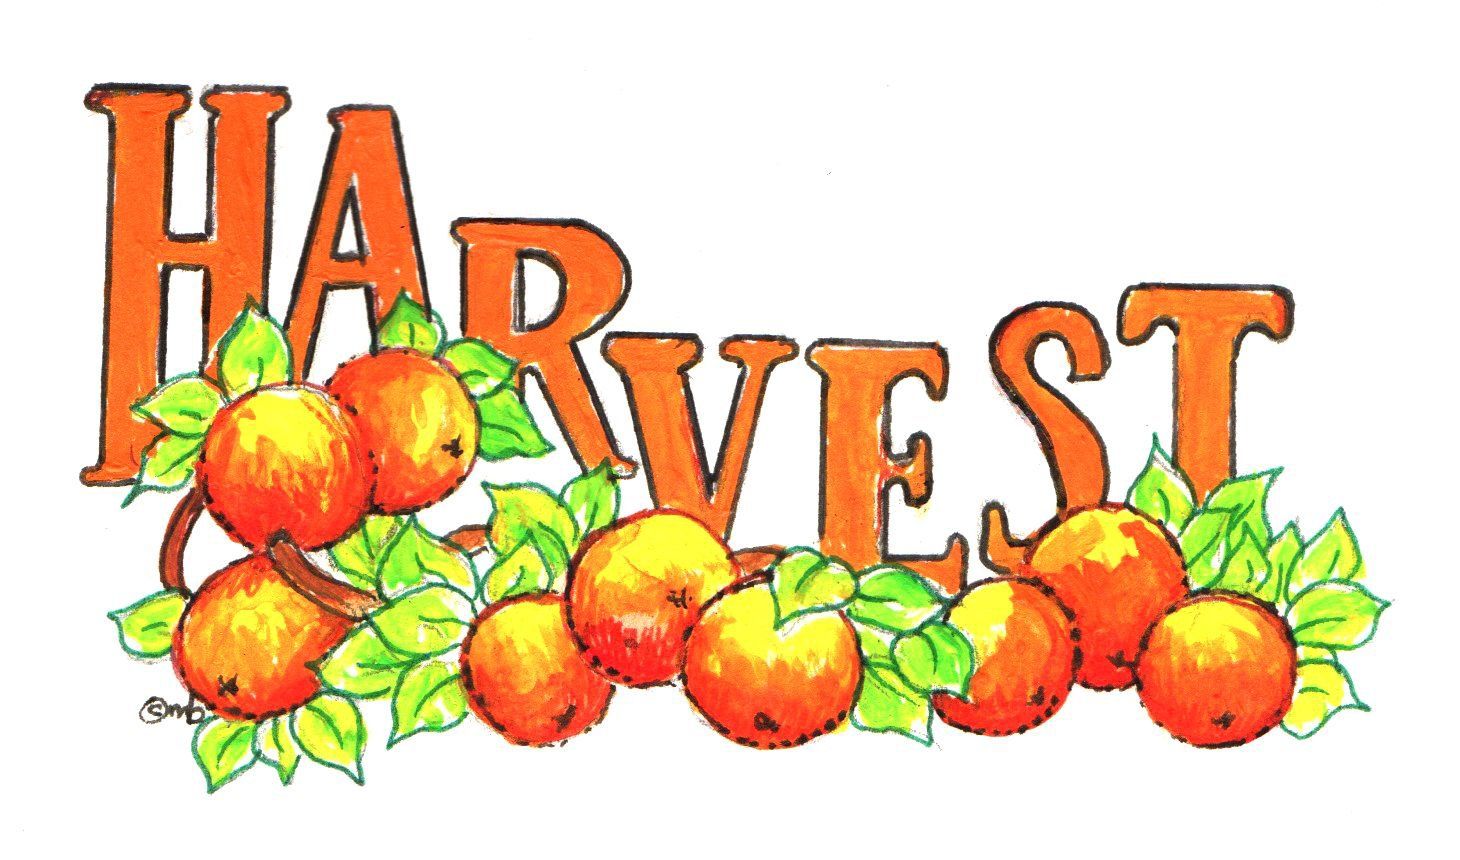 Harvest Festival Fruits by Marilyn